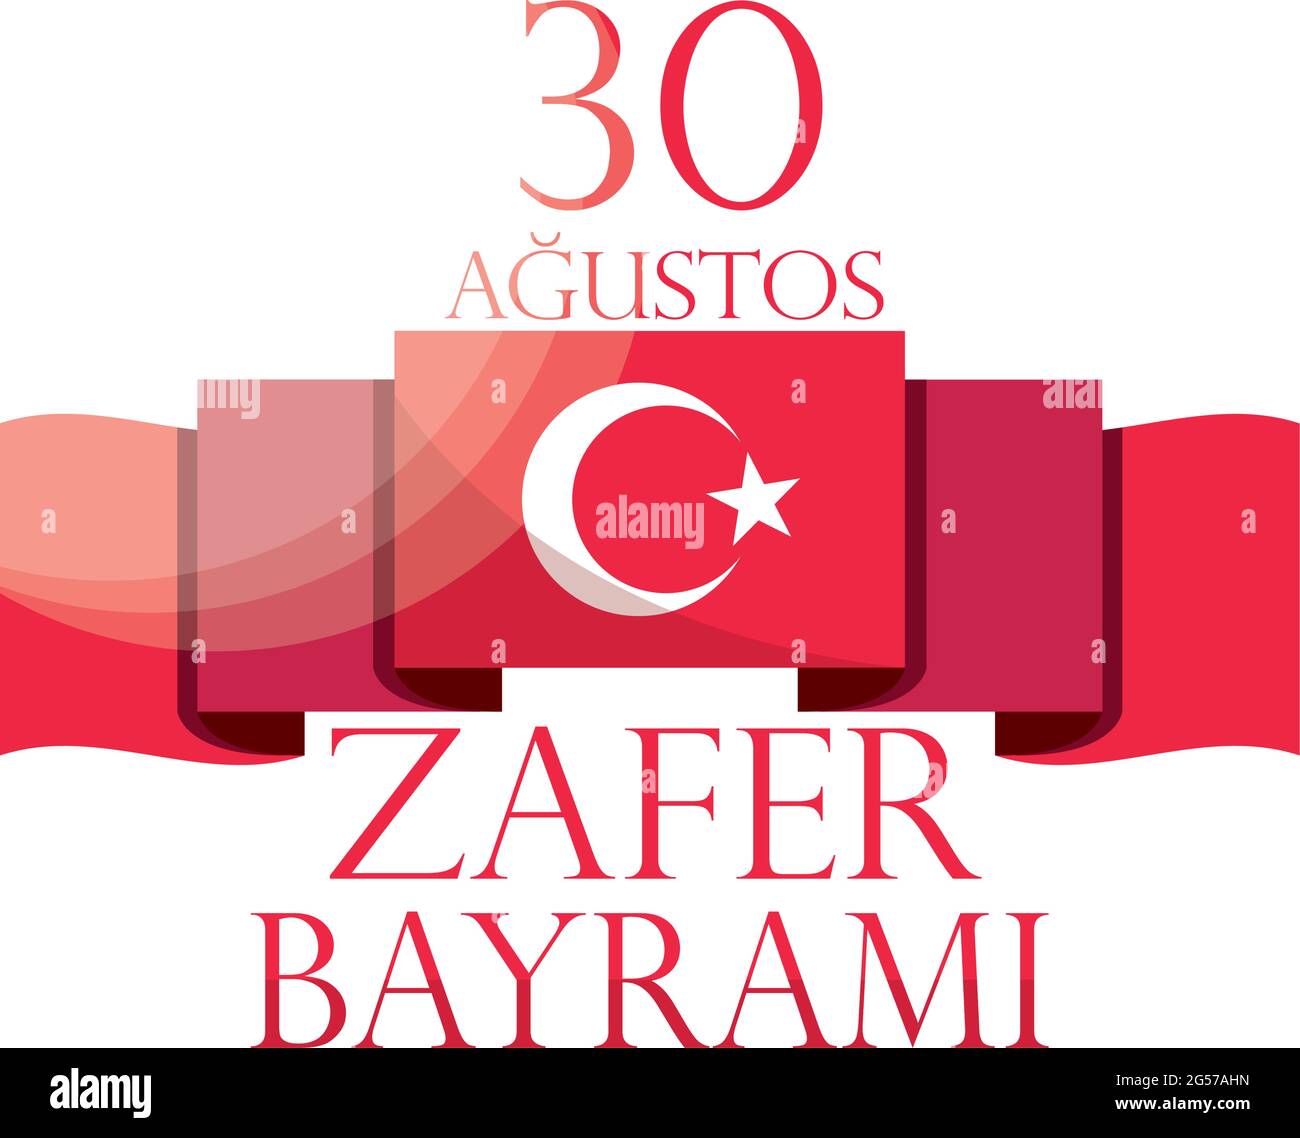 30 august zafer bayrami turkey Stock Vector